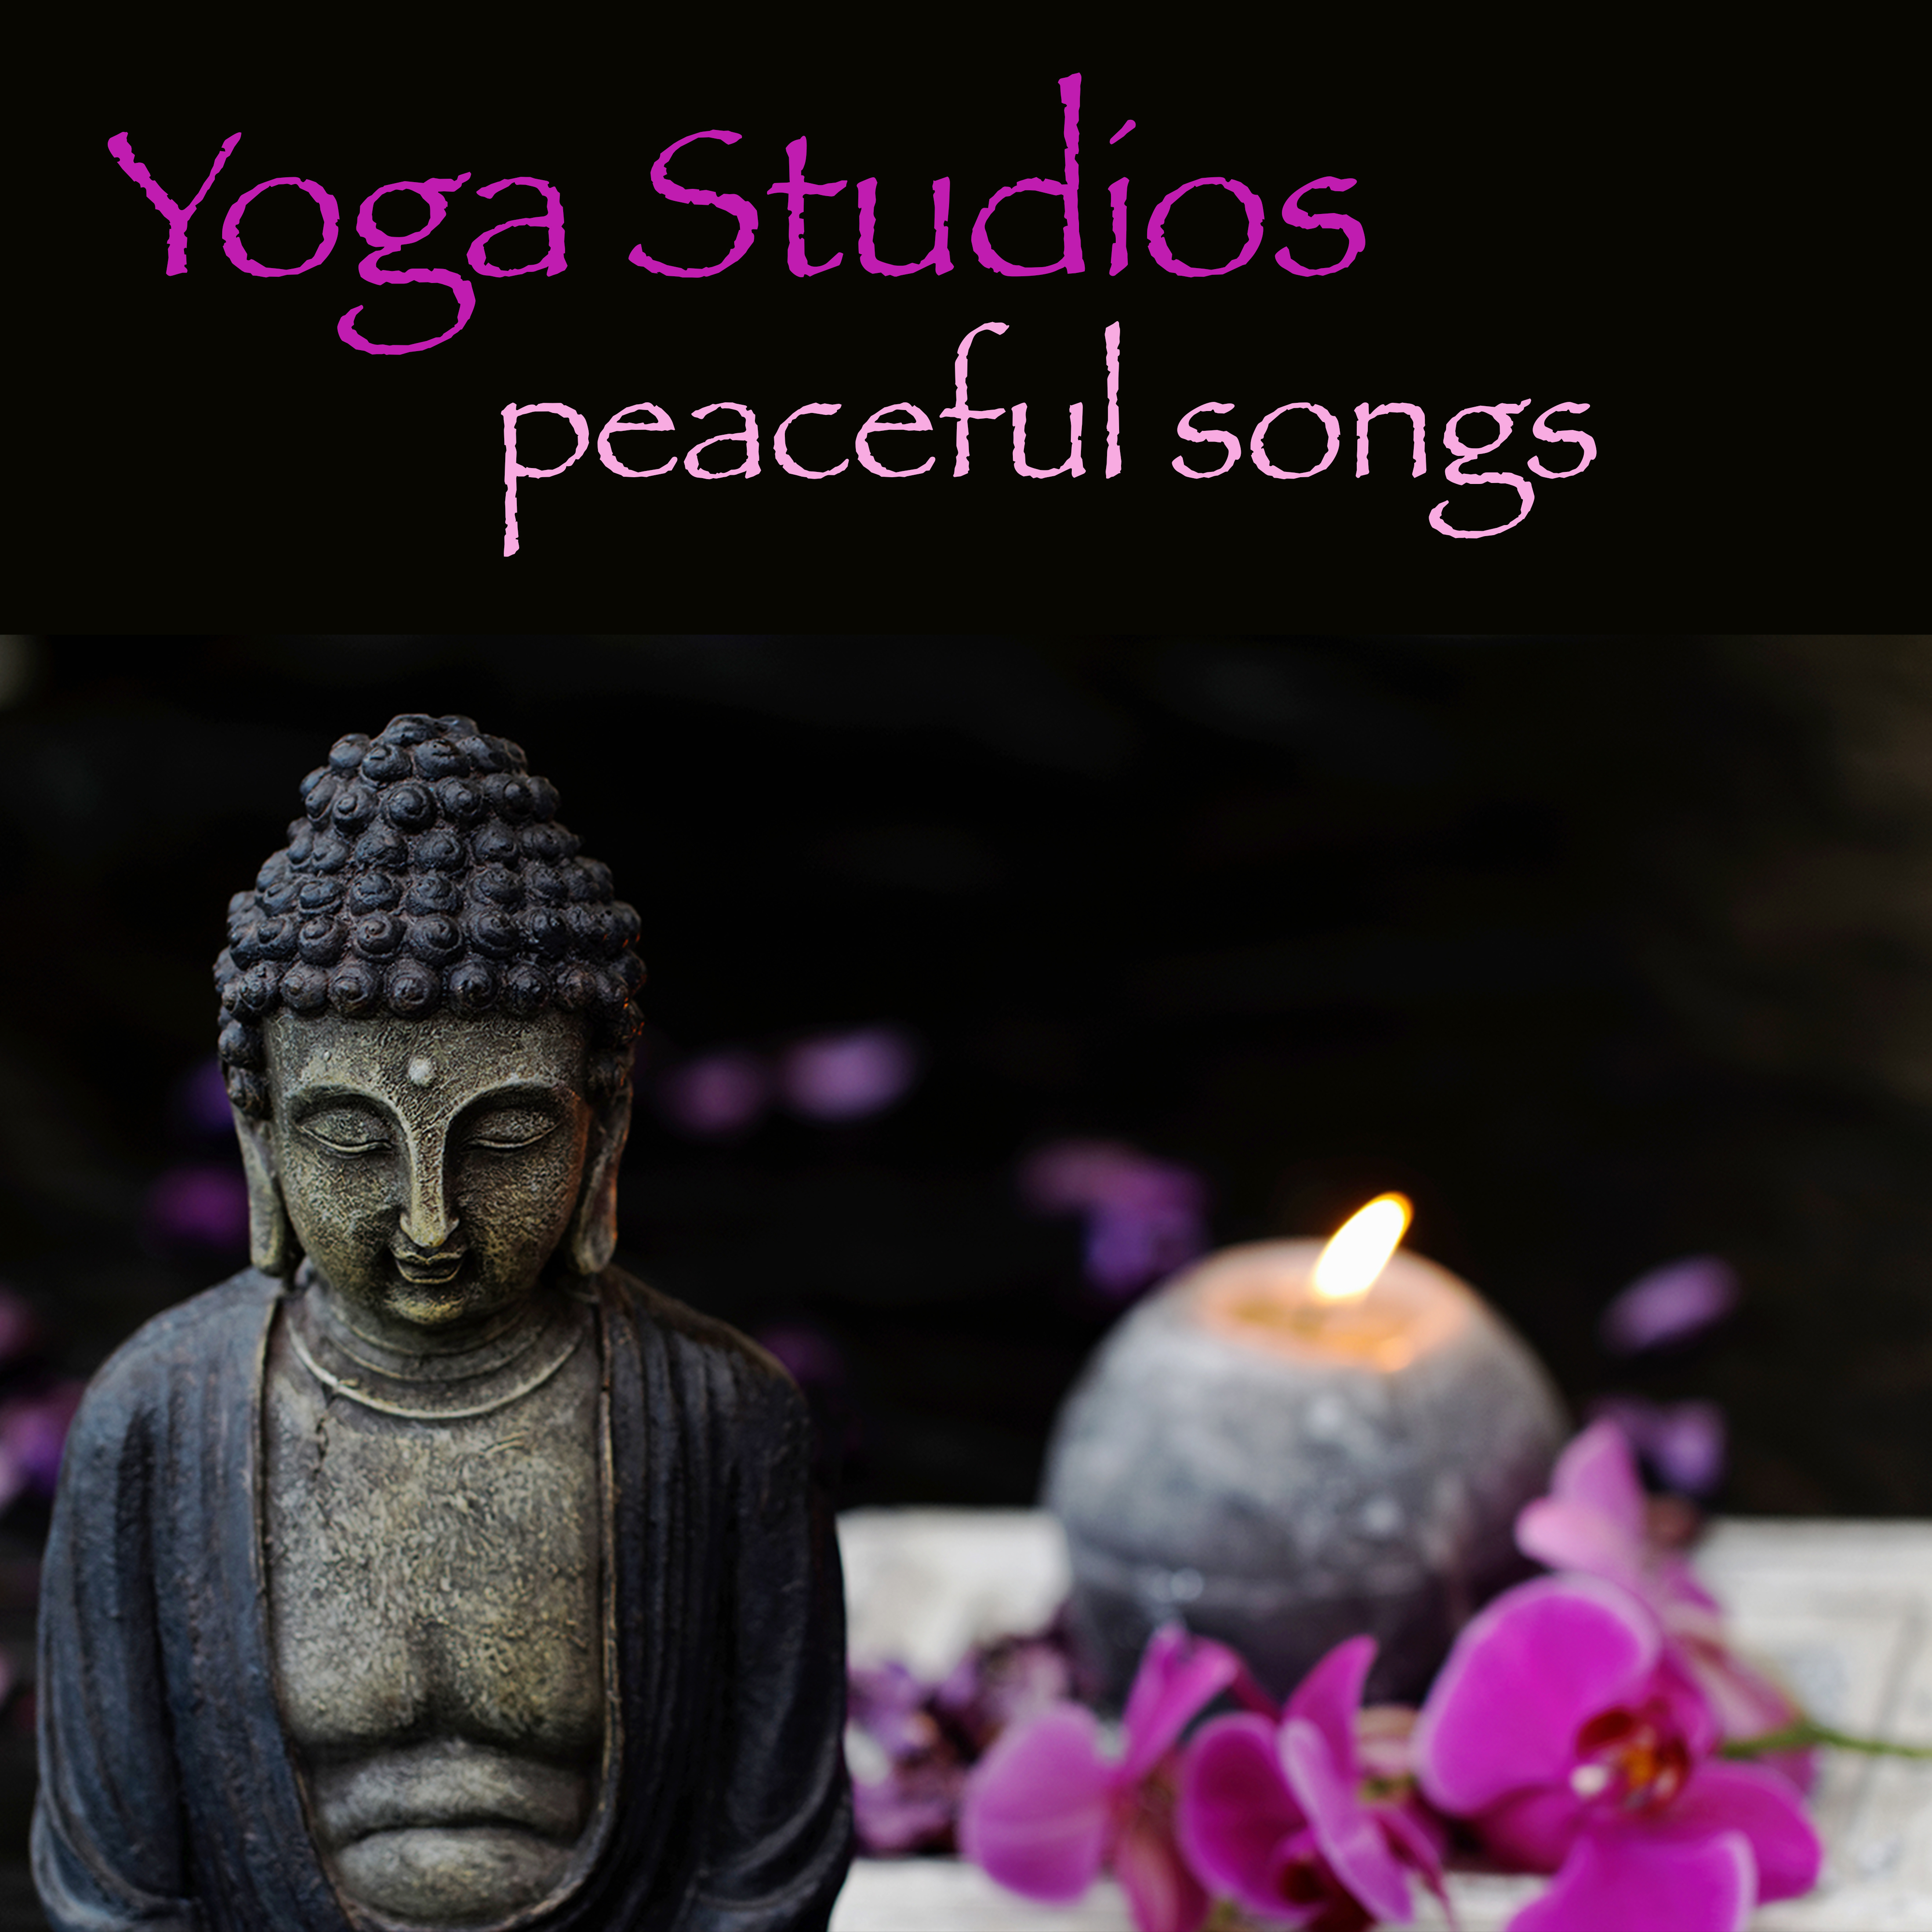 Yoga Studios Peaceful Songs  Soothing and Reiki Healing Music for Yoga, Meditation, Tai Chi, Qigong, Deep Relaxation  Sleep